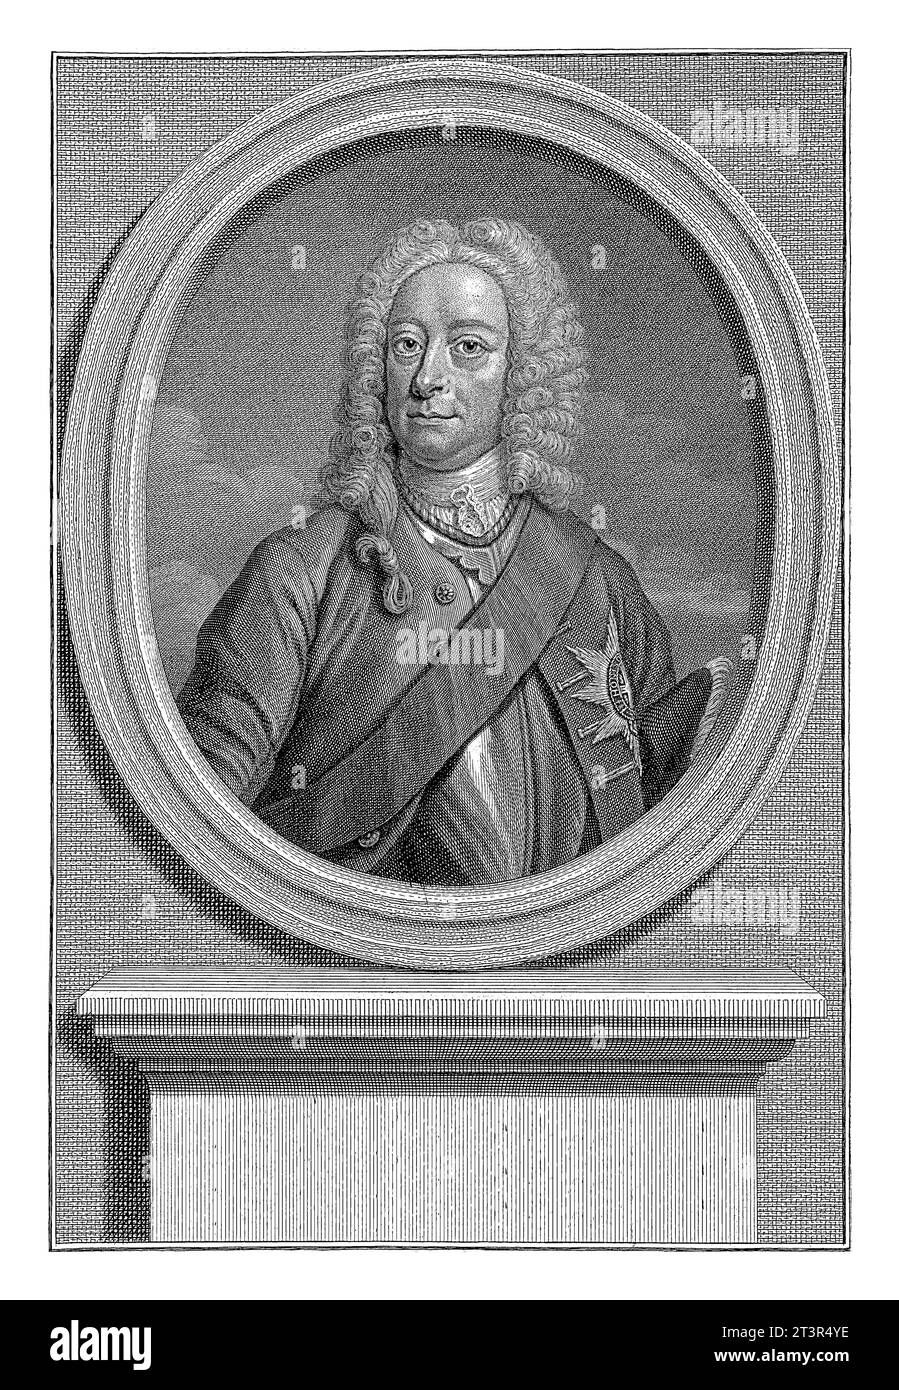 Retrato del rey Jorge I de Gran Bretaña, Pieter Tanje, después de Juan Faber (II), 1752 Retrato de Jorge I, rey de Gran Bretaña y elector de Hanov Foto de stock